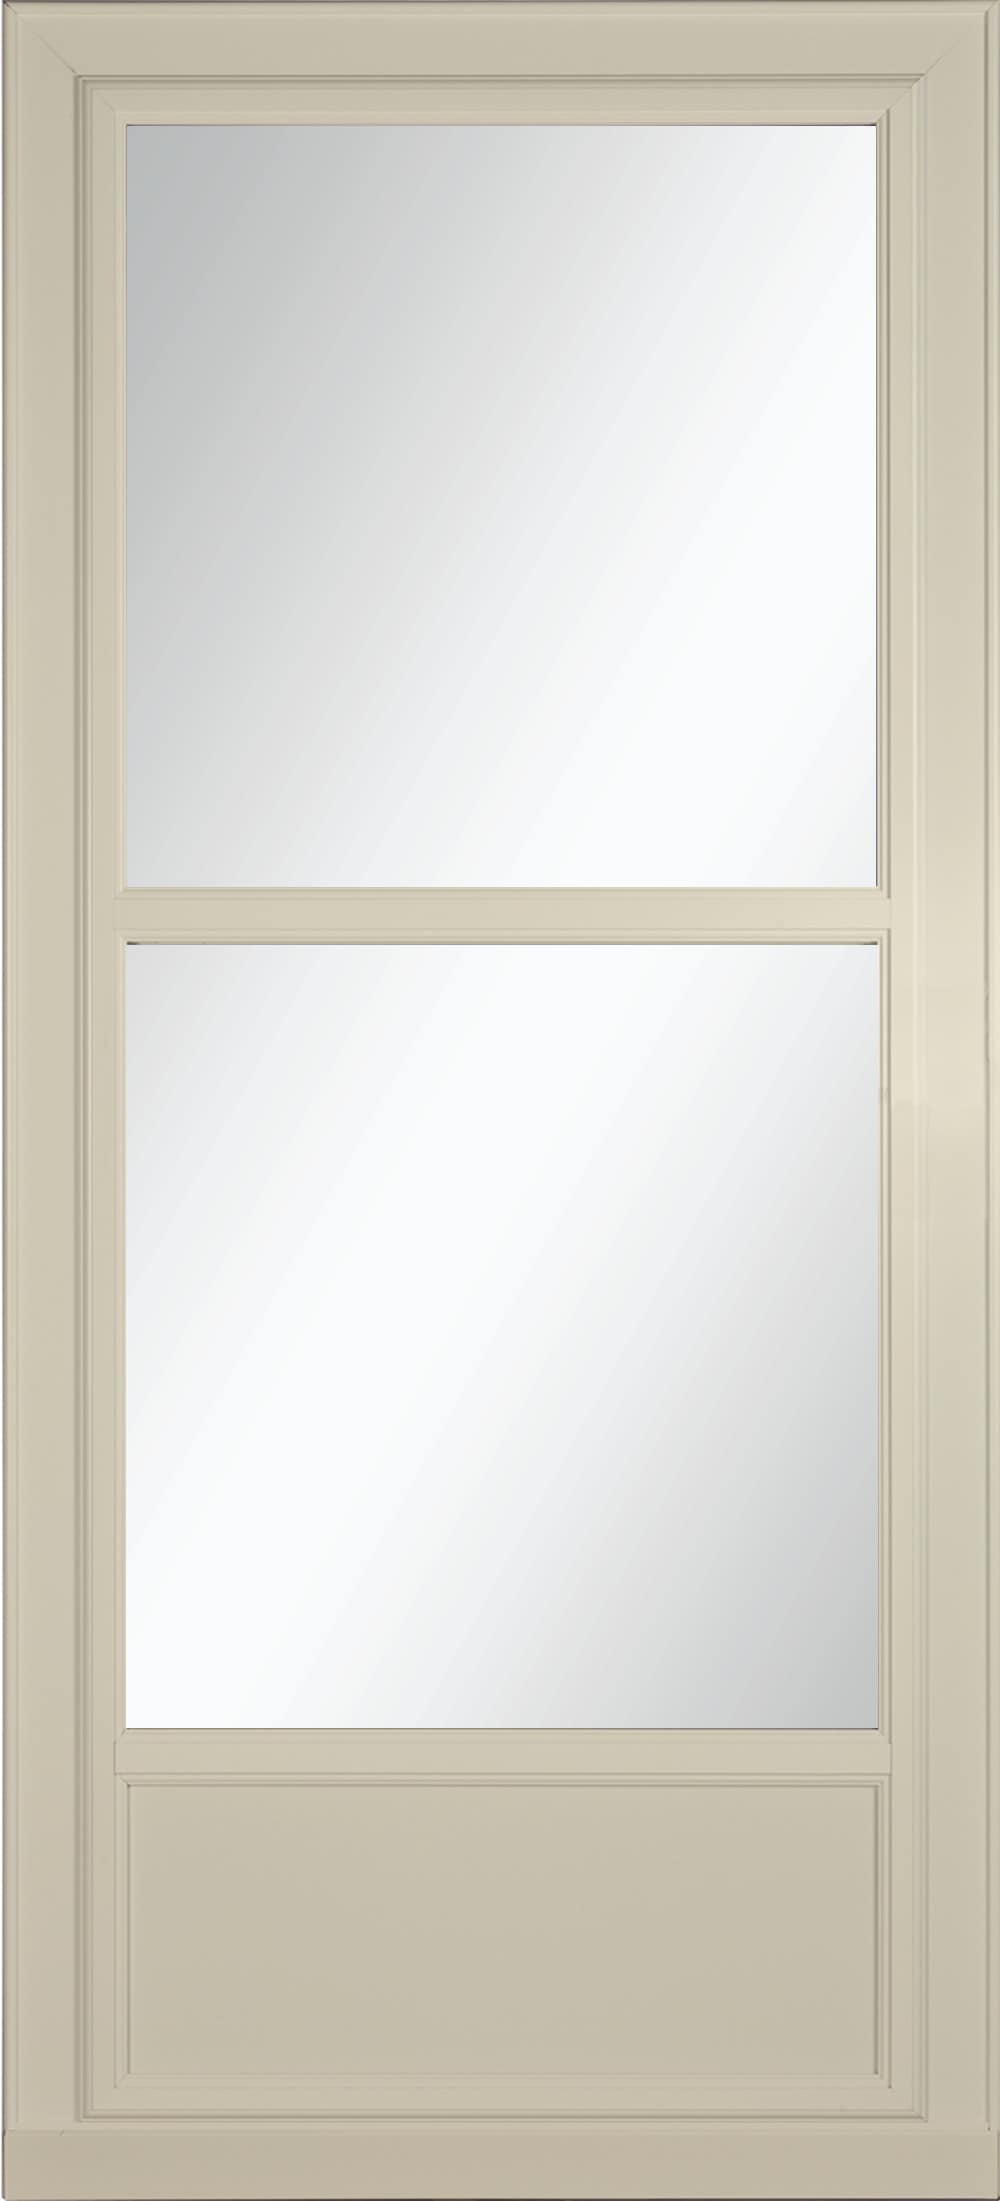 Tradewinds Selection 36-in x 81-in Almond Mid-view Retractable Screen Aluminum Storm Door in Off-White | - LARSON 14606082